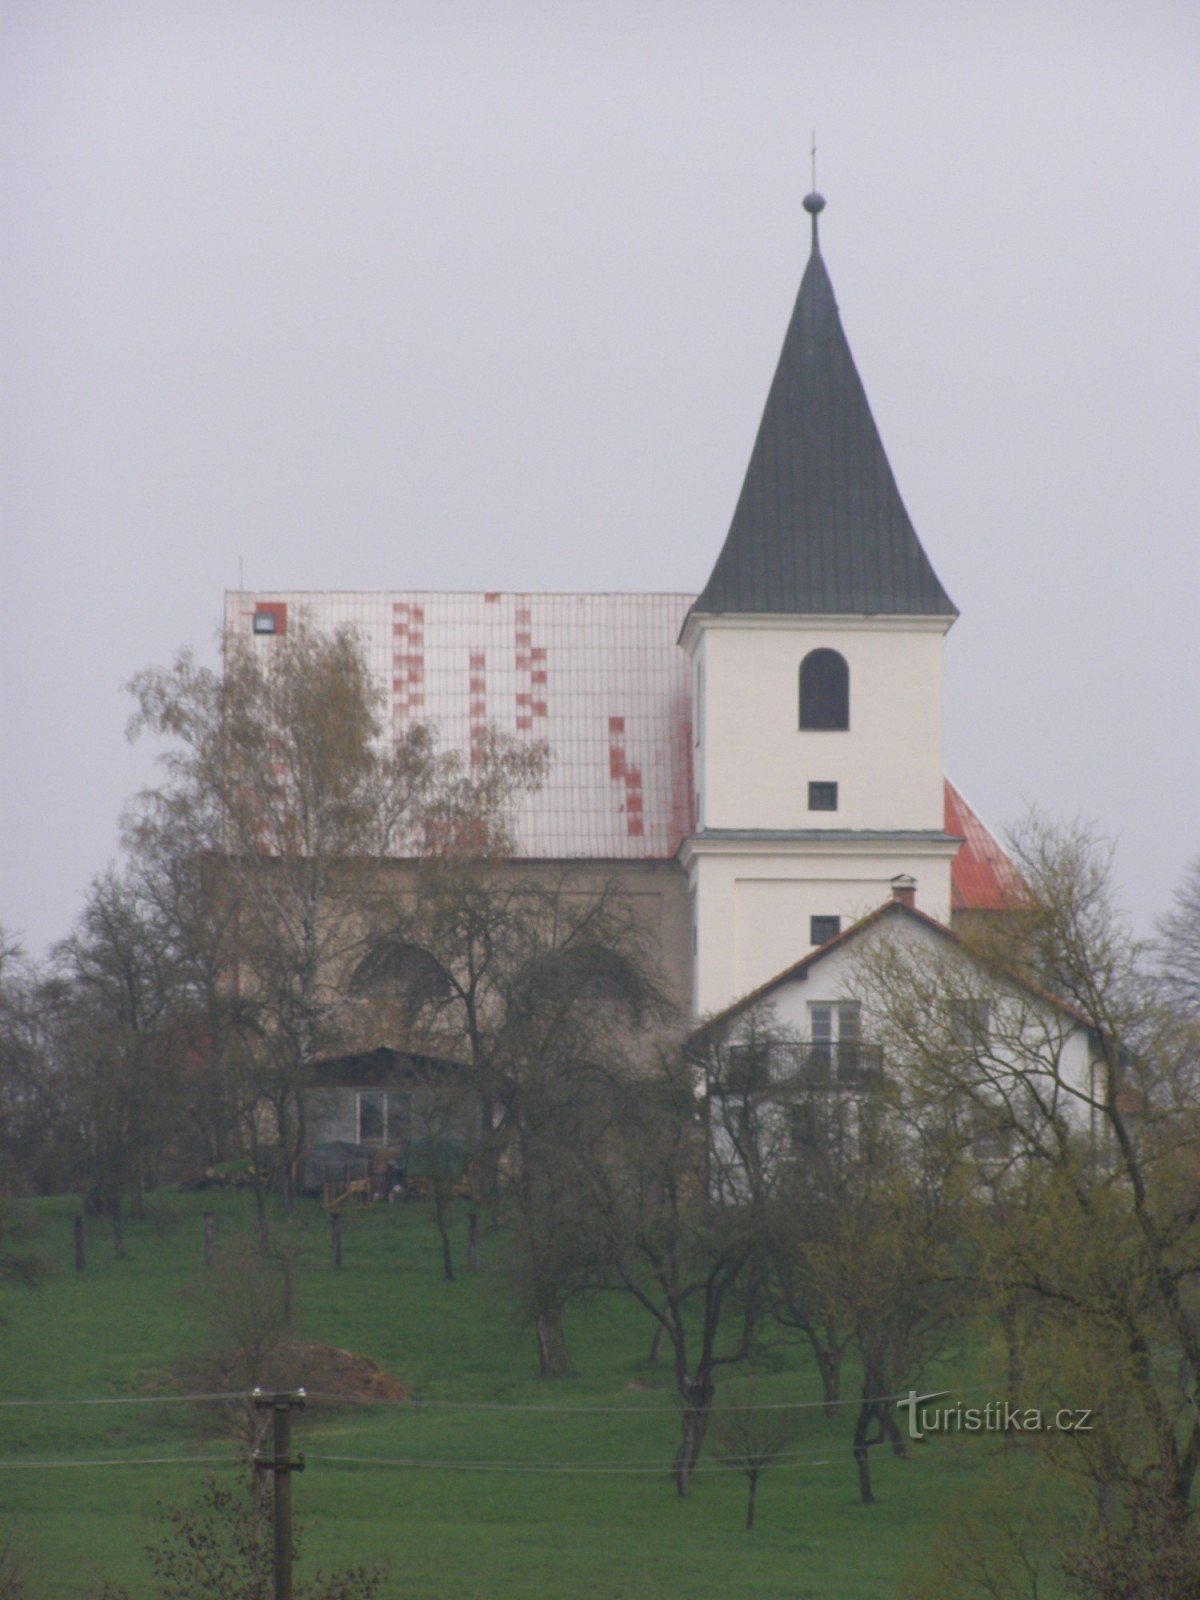 Šachov - Den Hellige Treenigheds Kirke